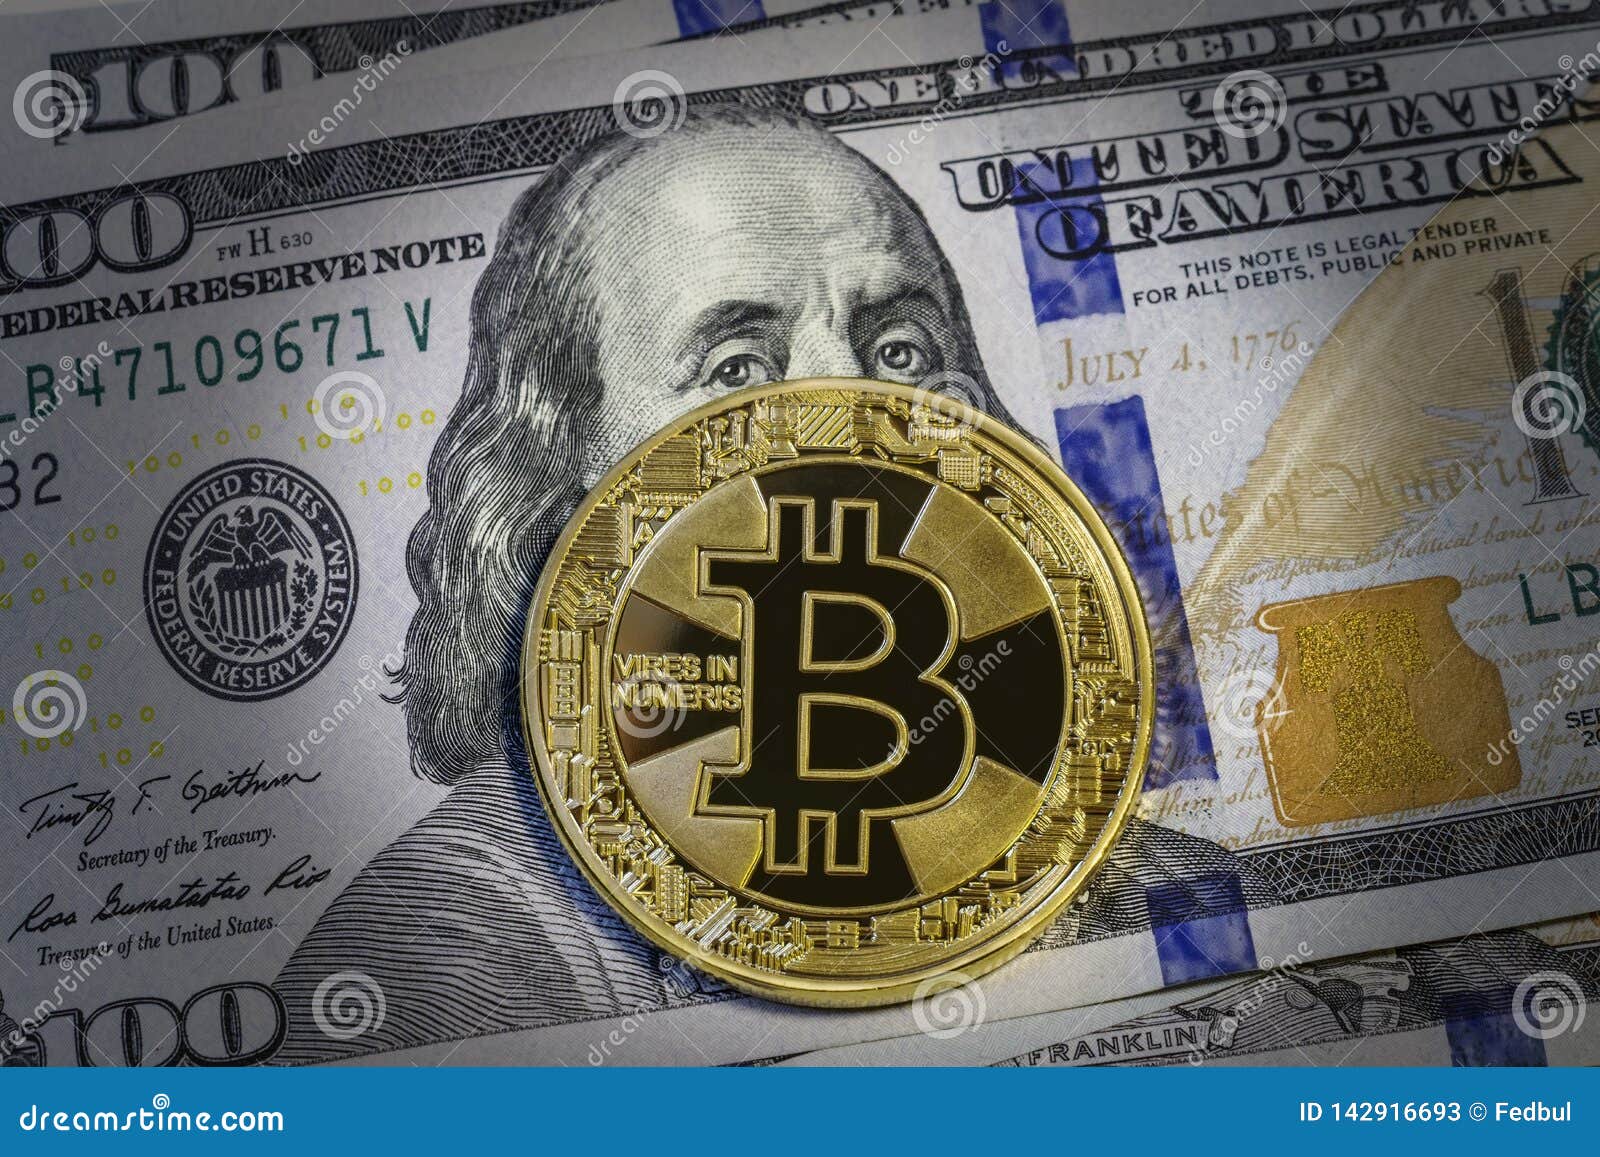 100 dollars bitcoin 4 years ago